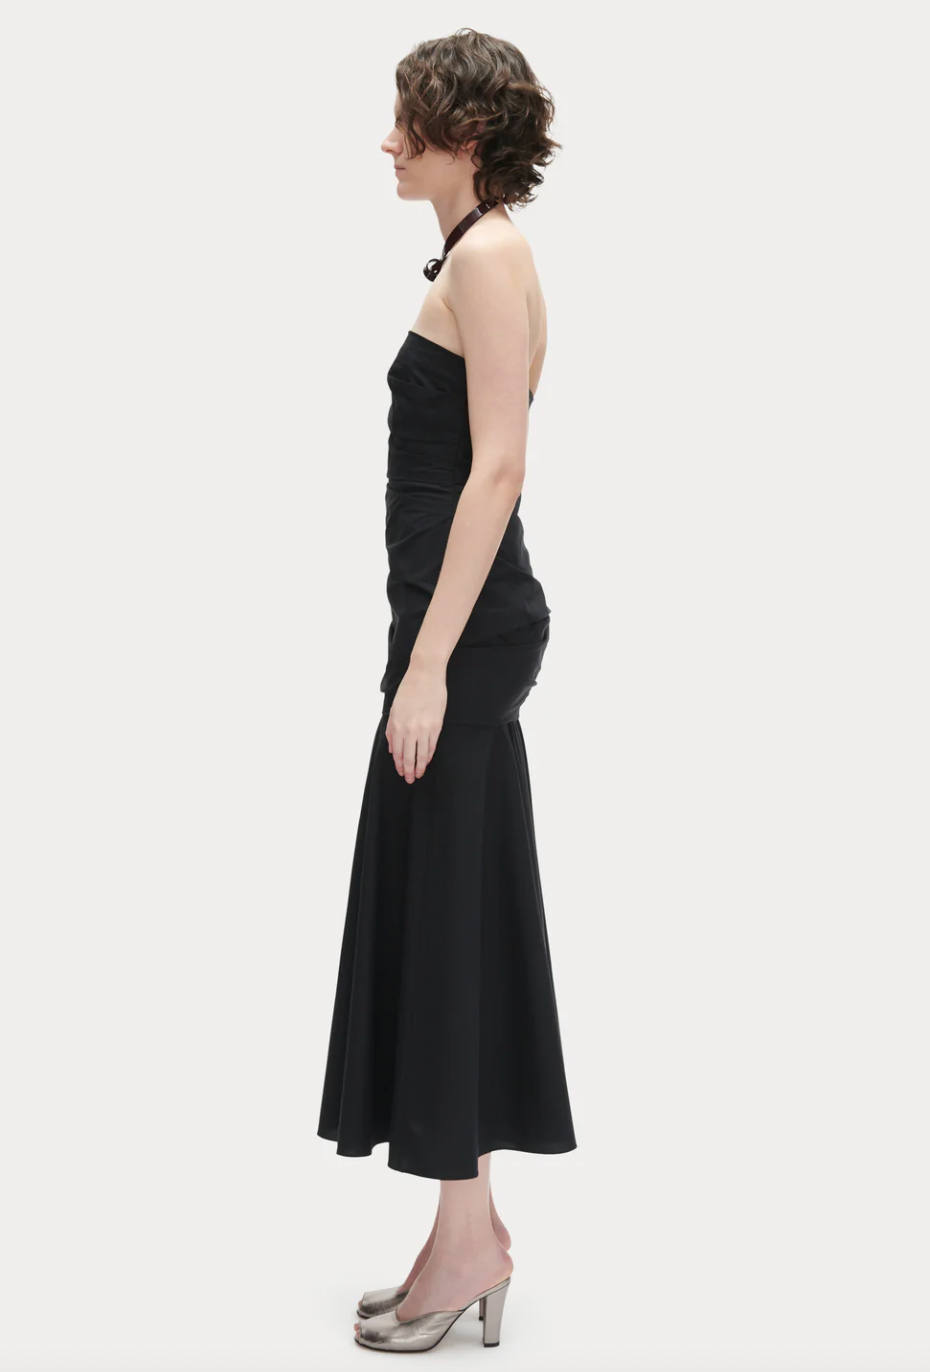 Product Image for Locanda Dress, Black